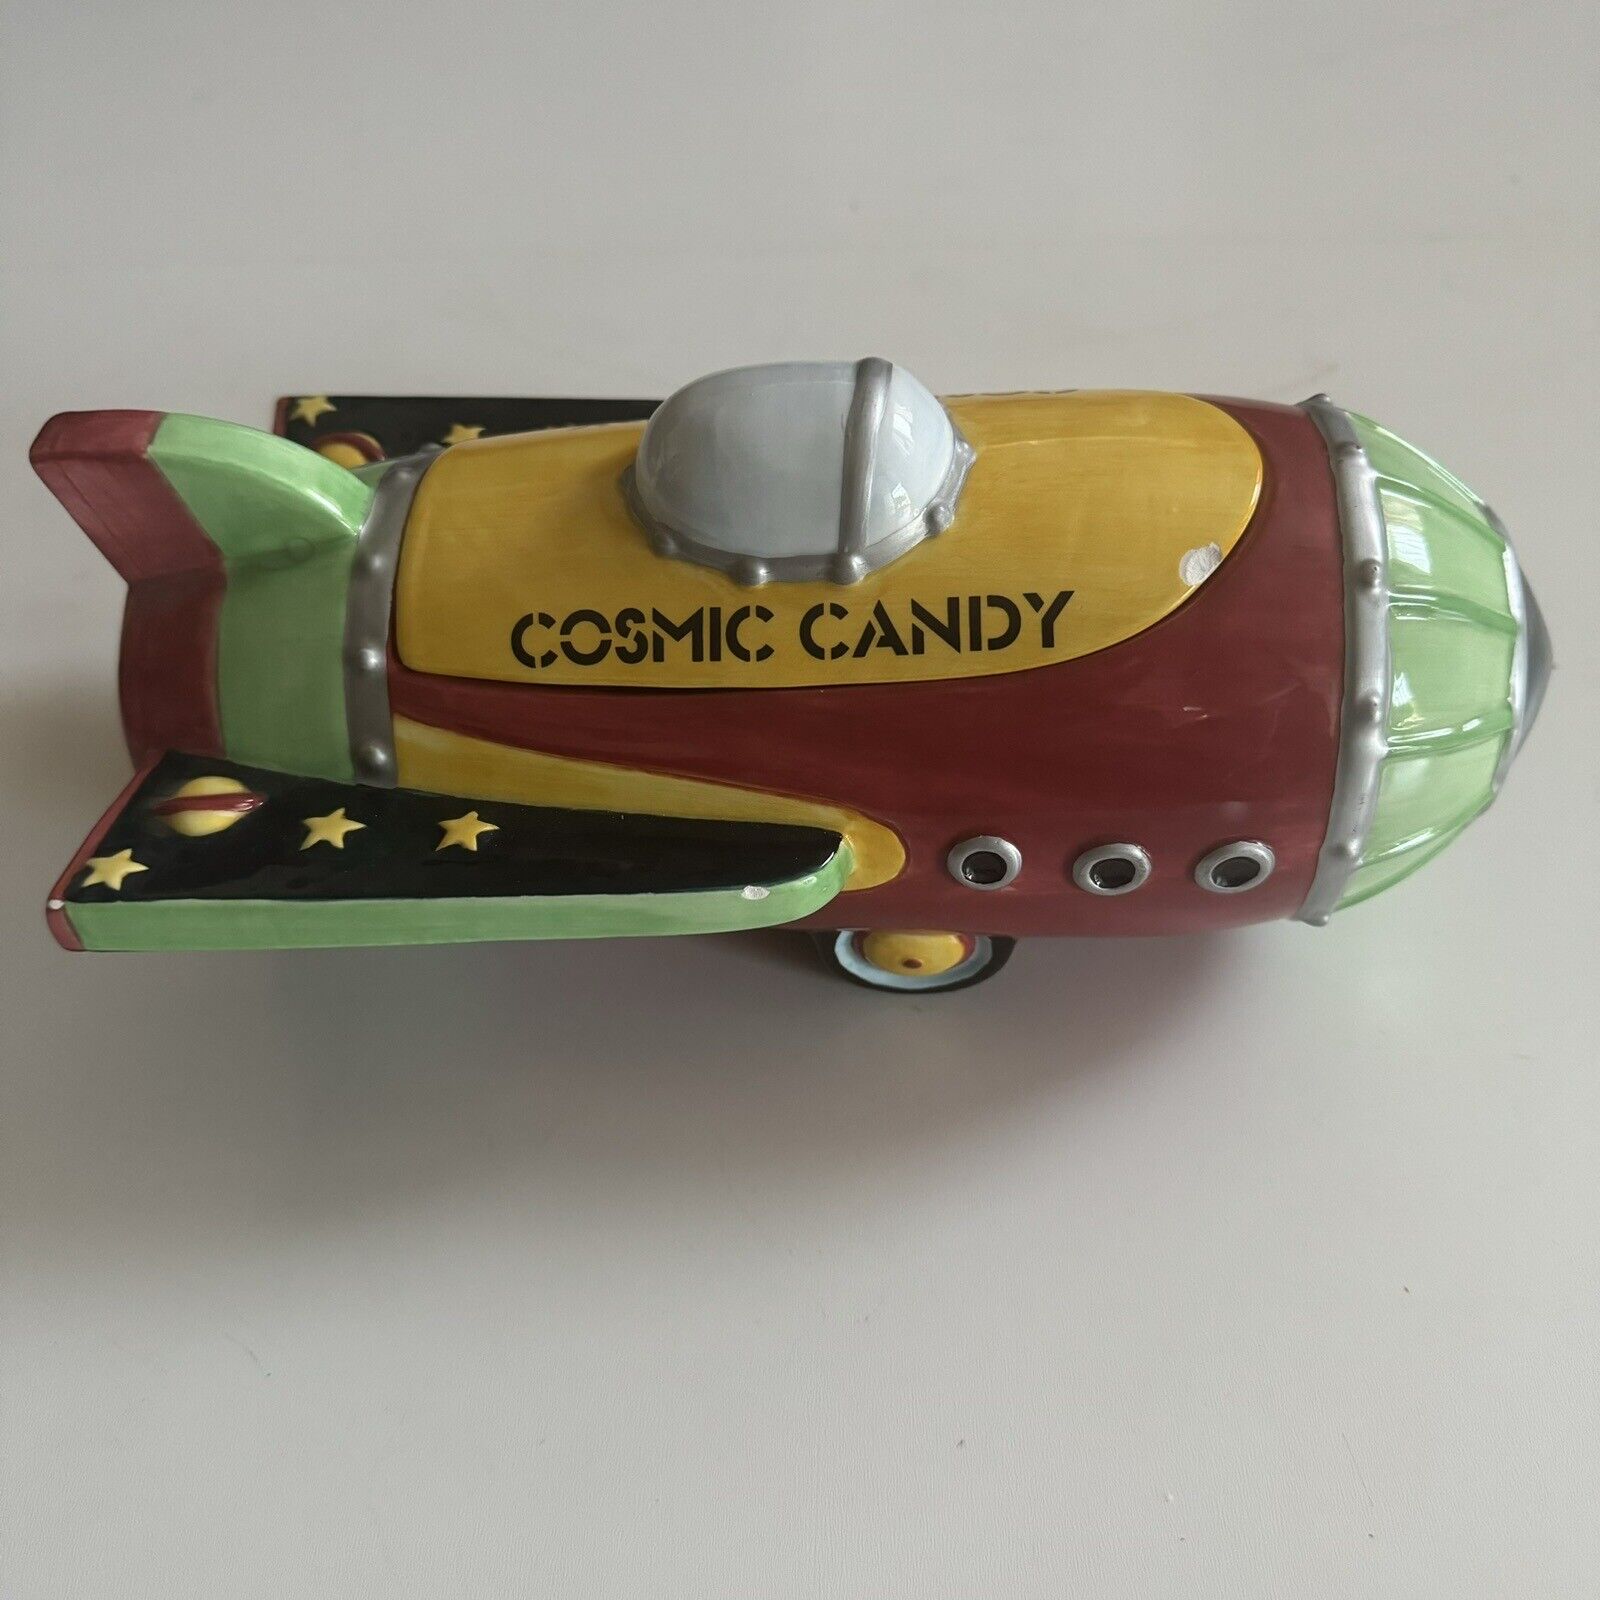 VANDOR TOYS Cosmic Candy Snack Dish SpaceShip Cookie Jar - RARE